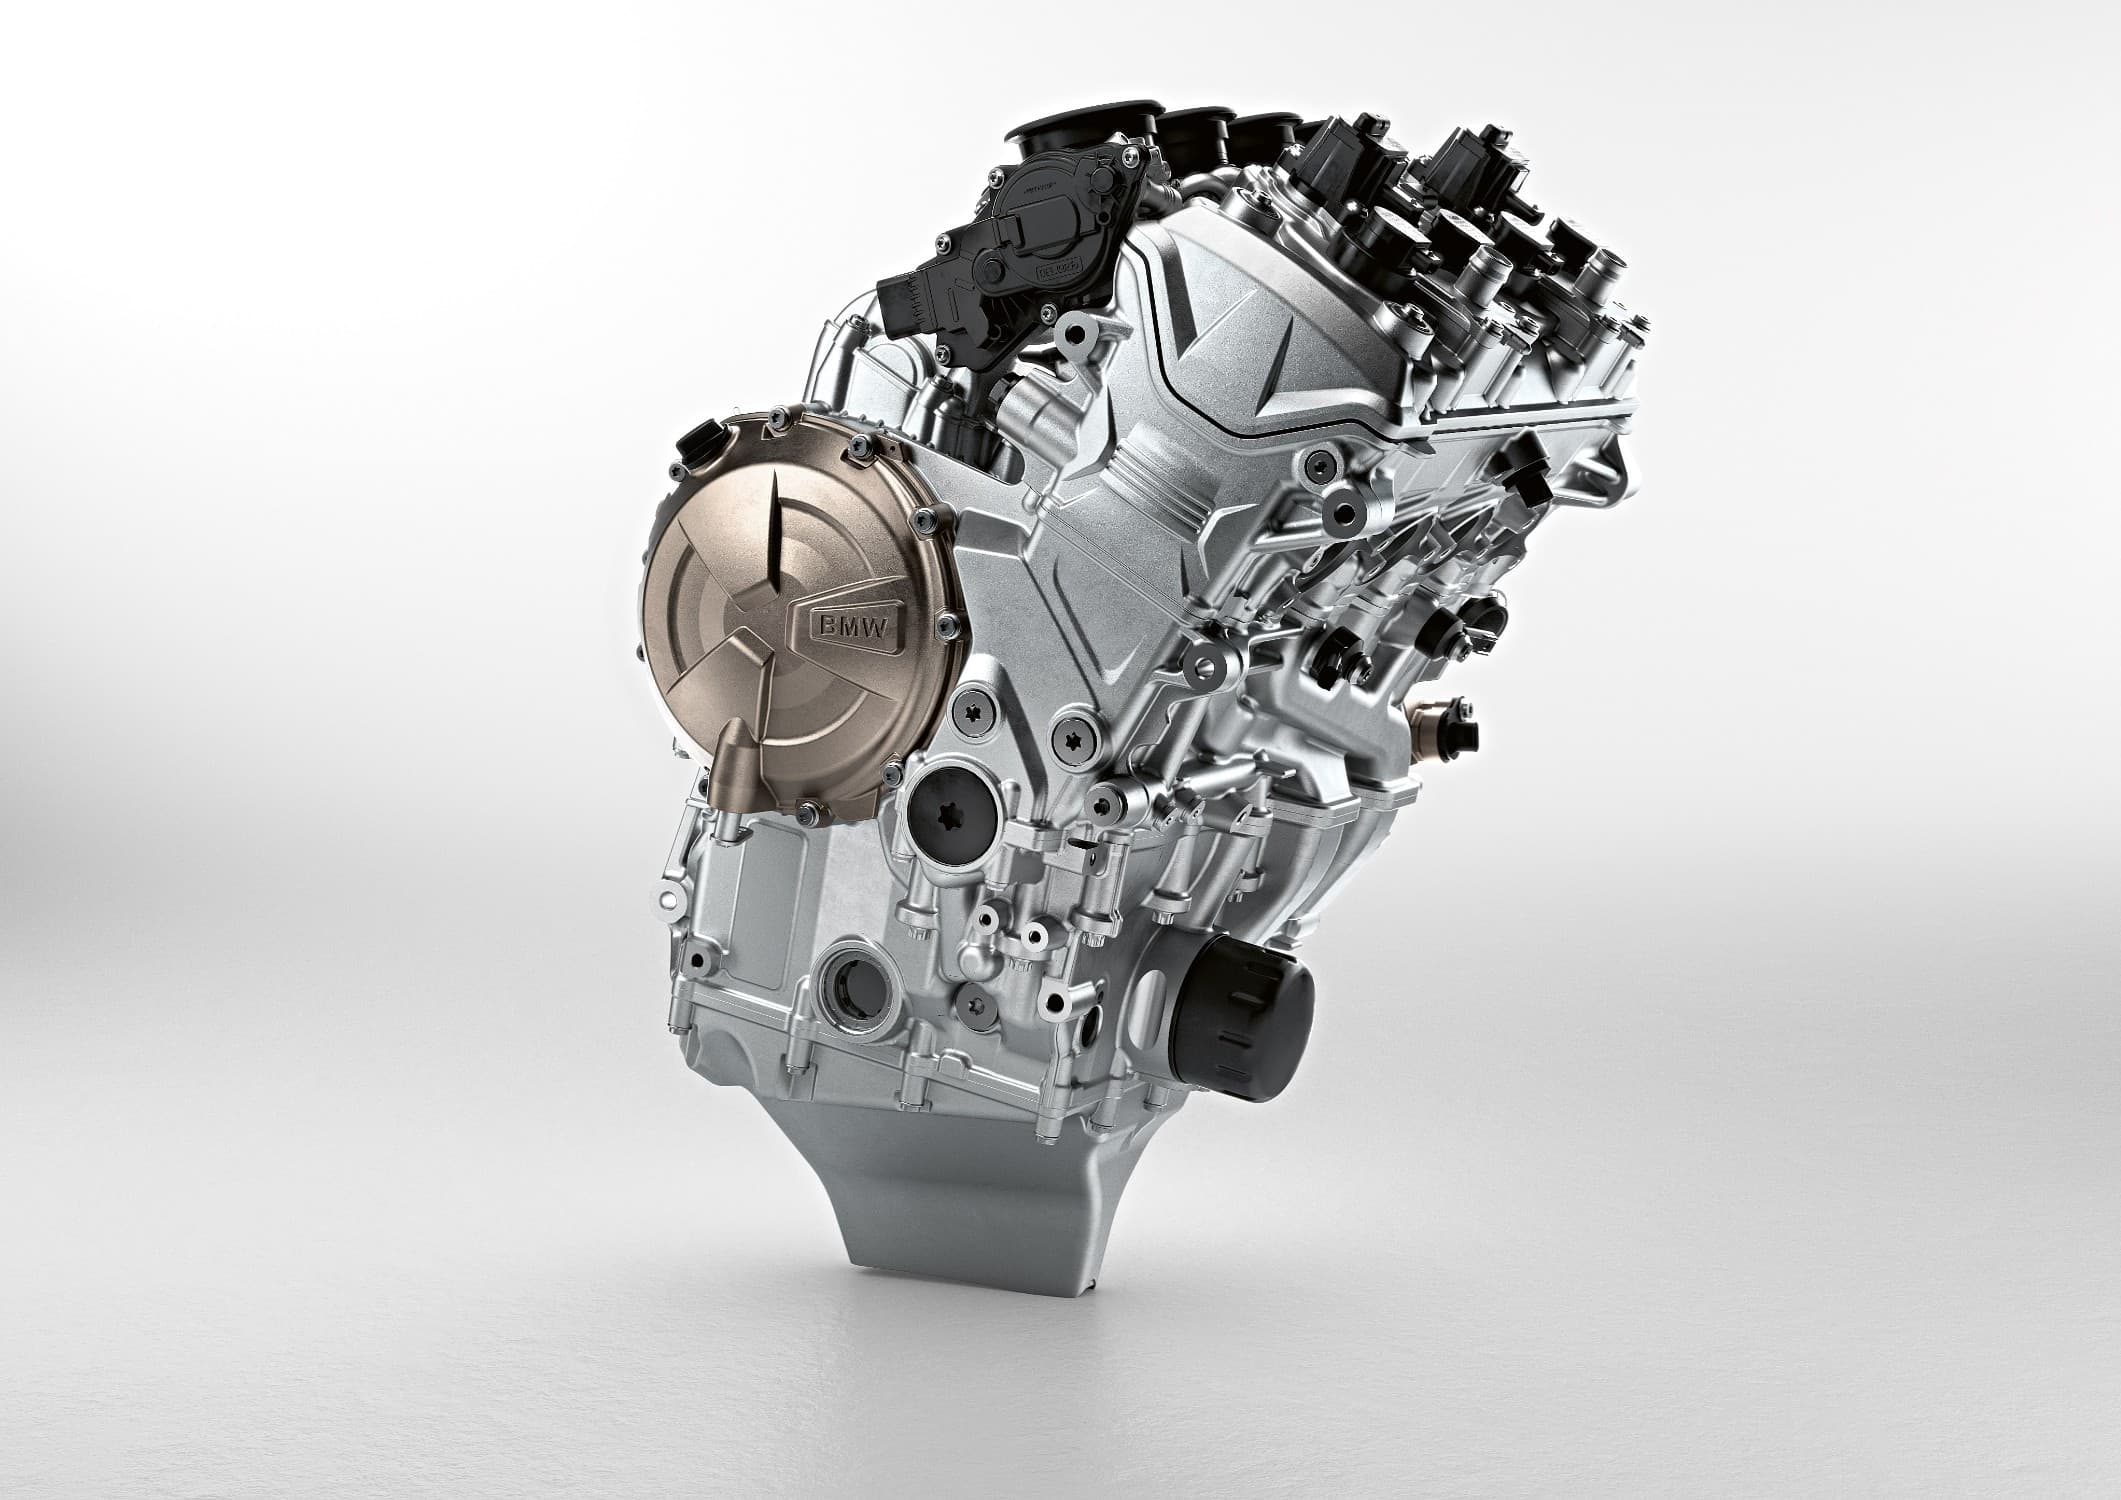 2019 BMW S 1000 RR engine